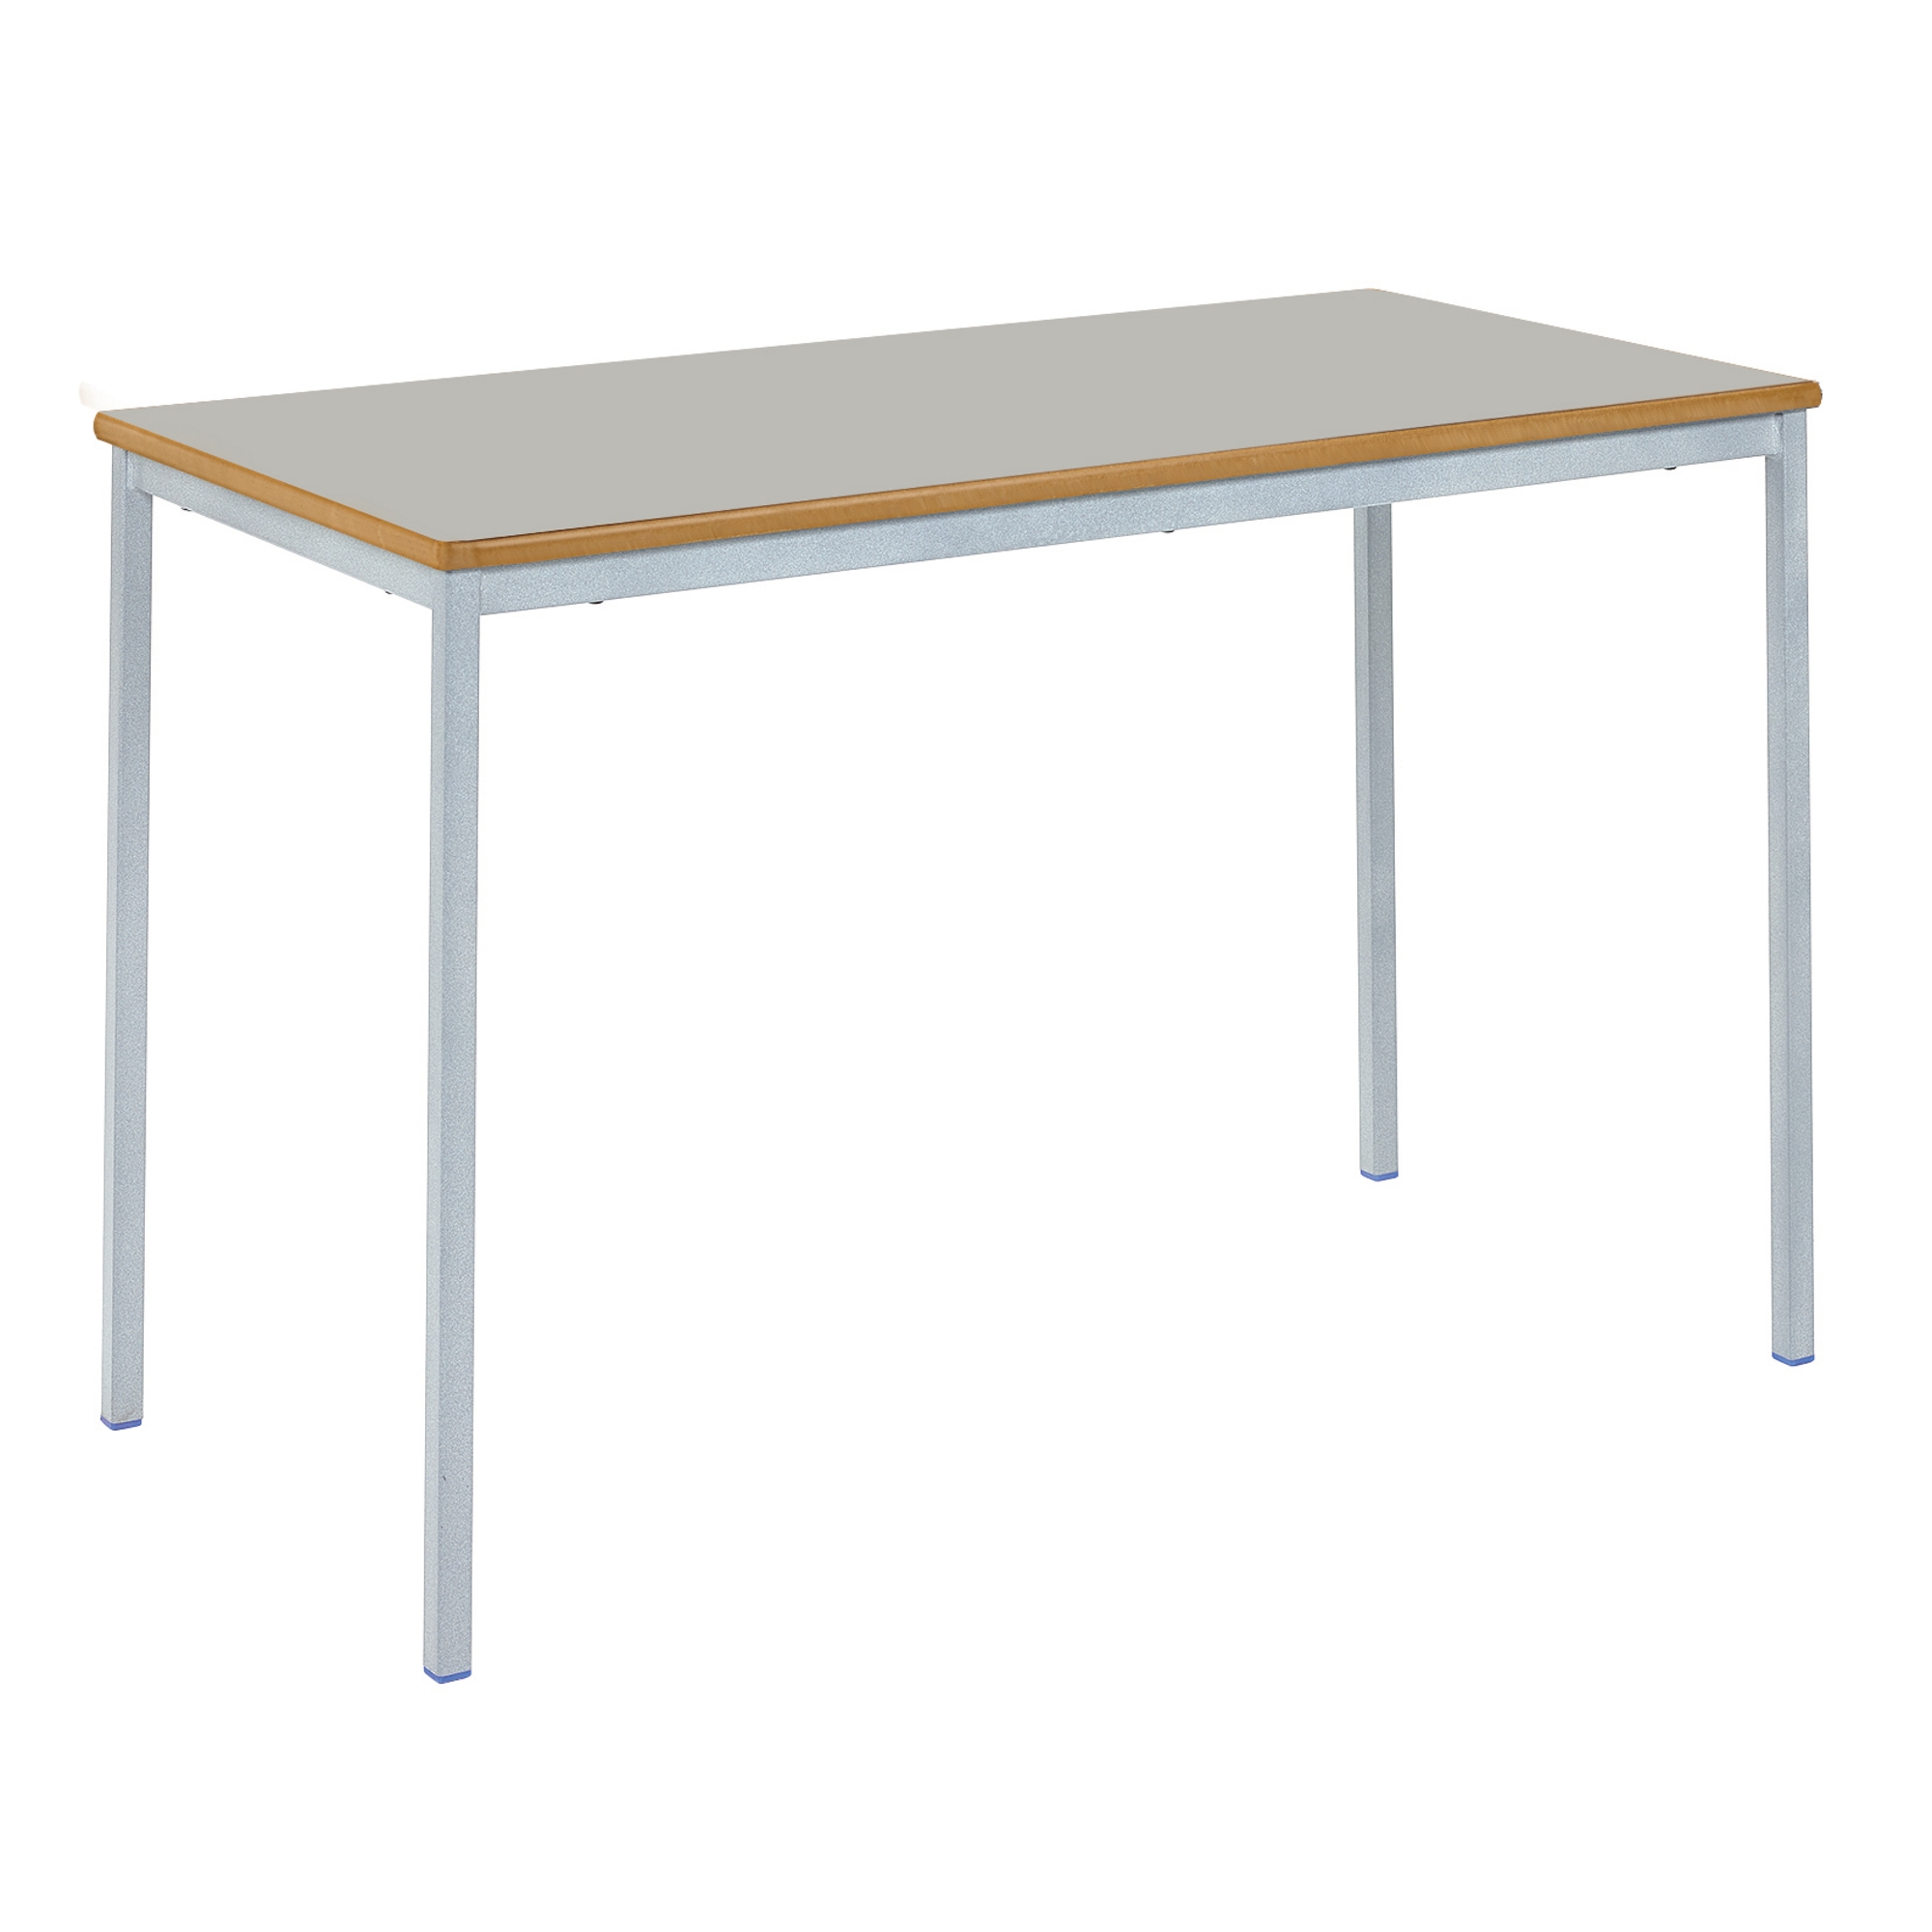 Classmates Rectangular Fully Welded Classroom Table - 1100 x 550 x 640mm - Grey